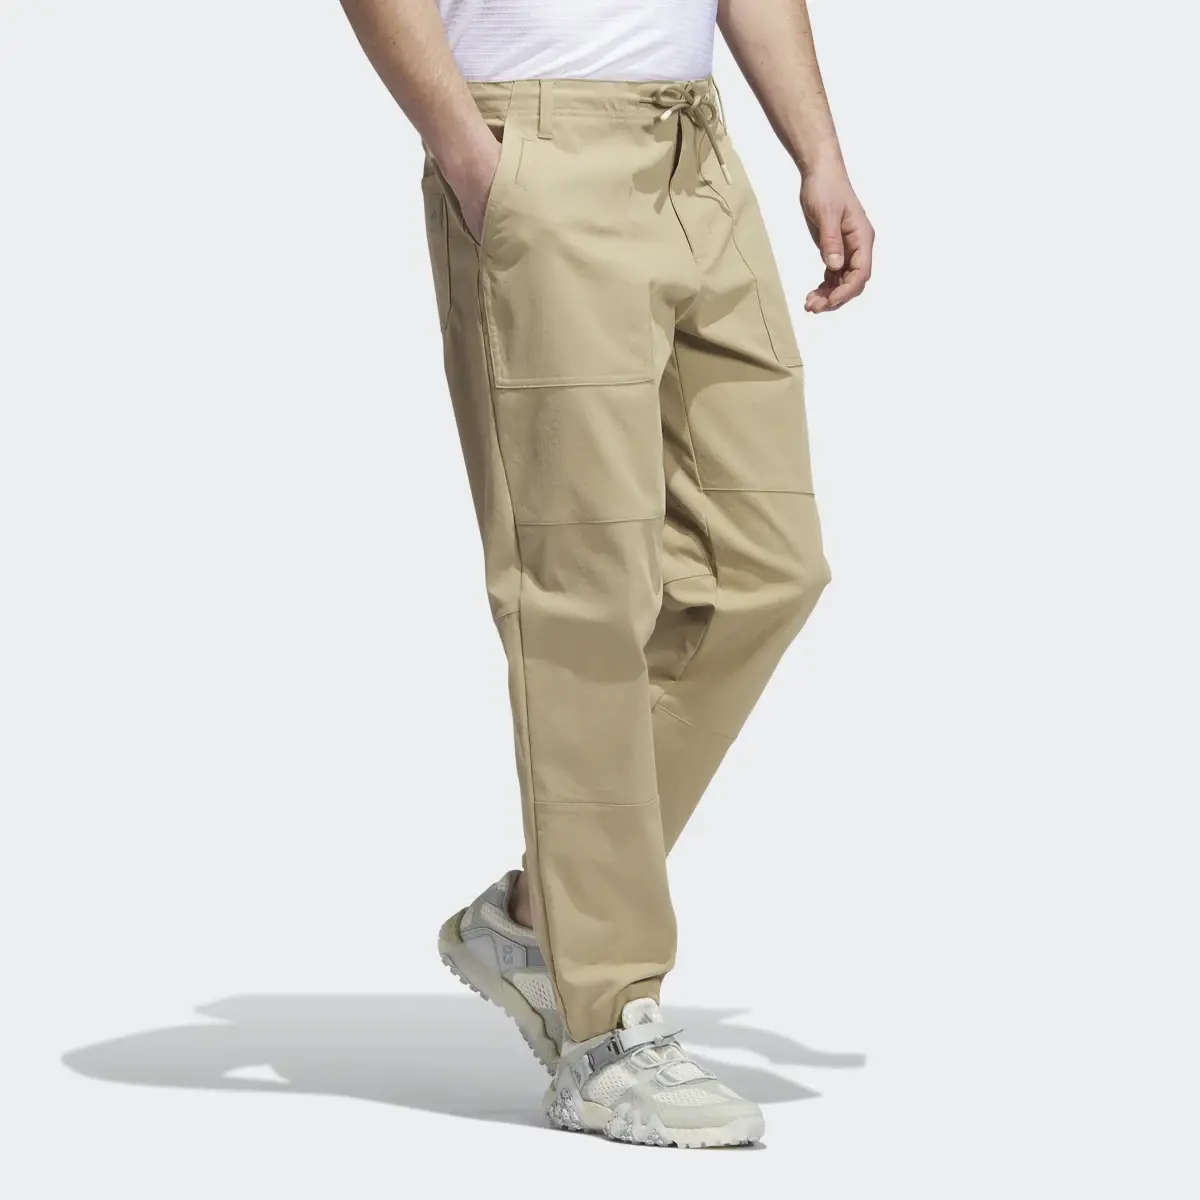 Adidas Adicross Golf Trousers. 3